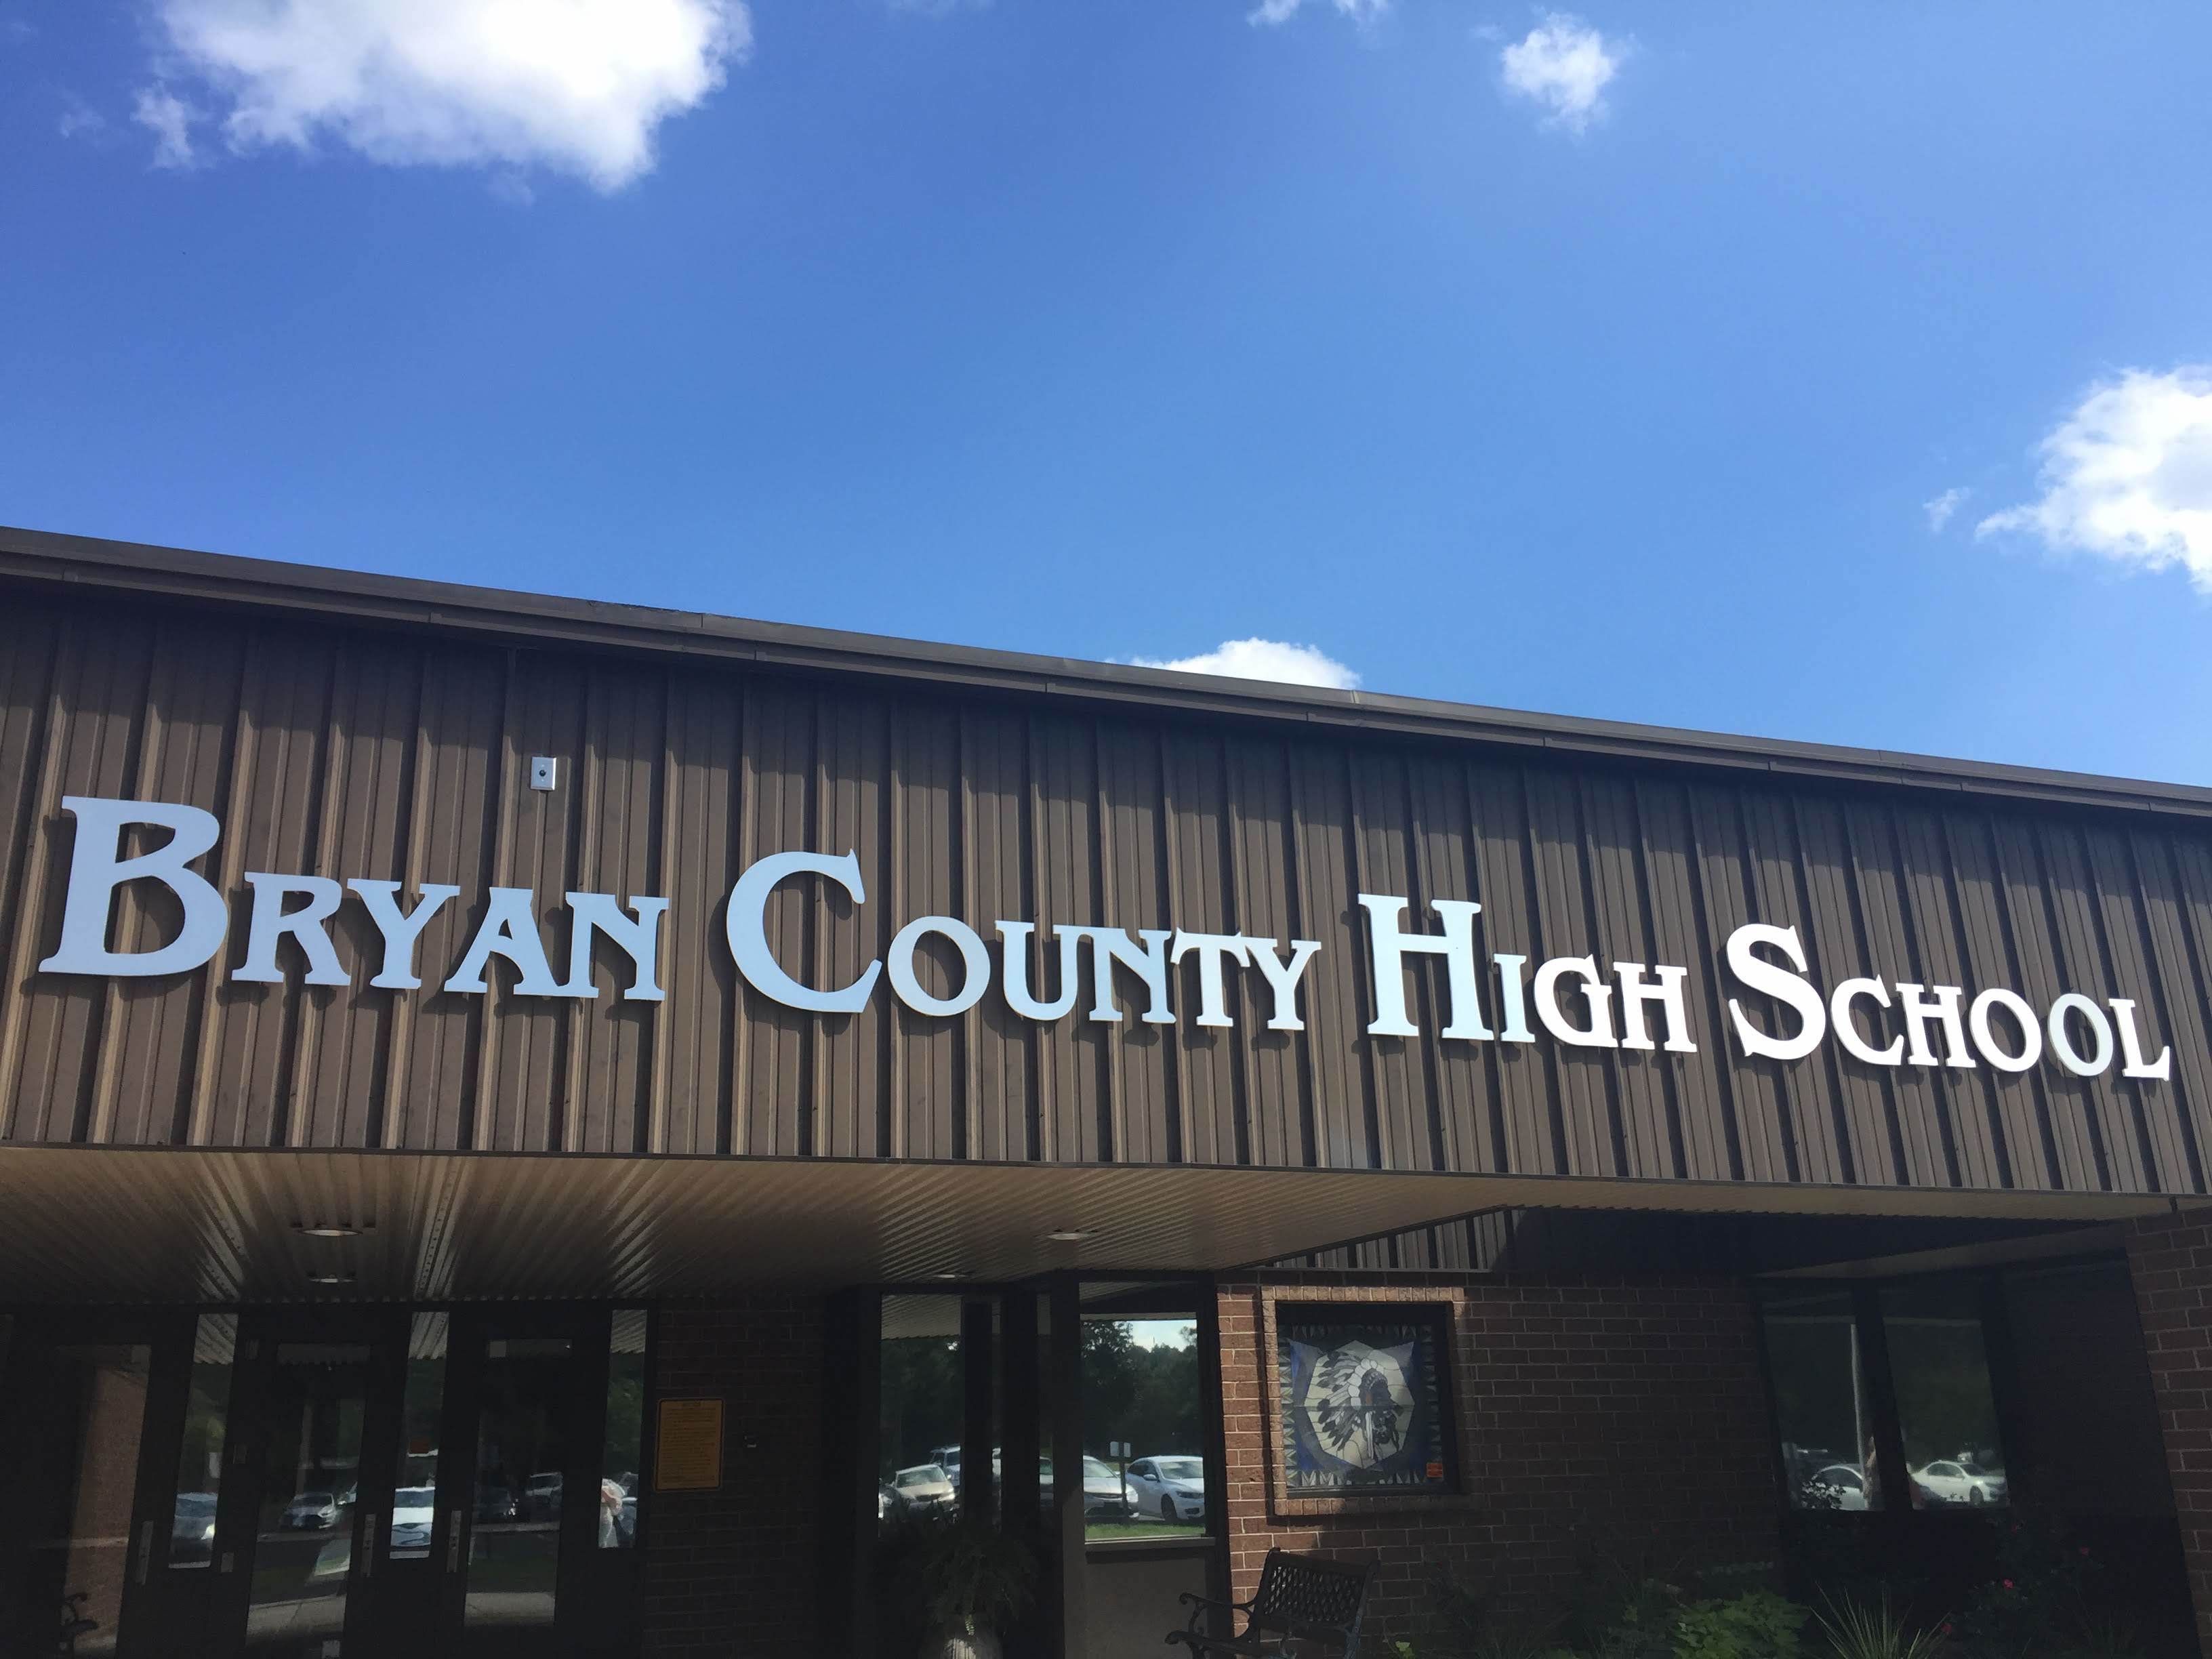 Bryan County High School